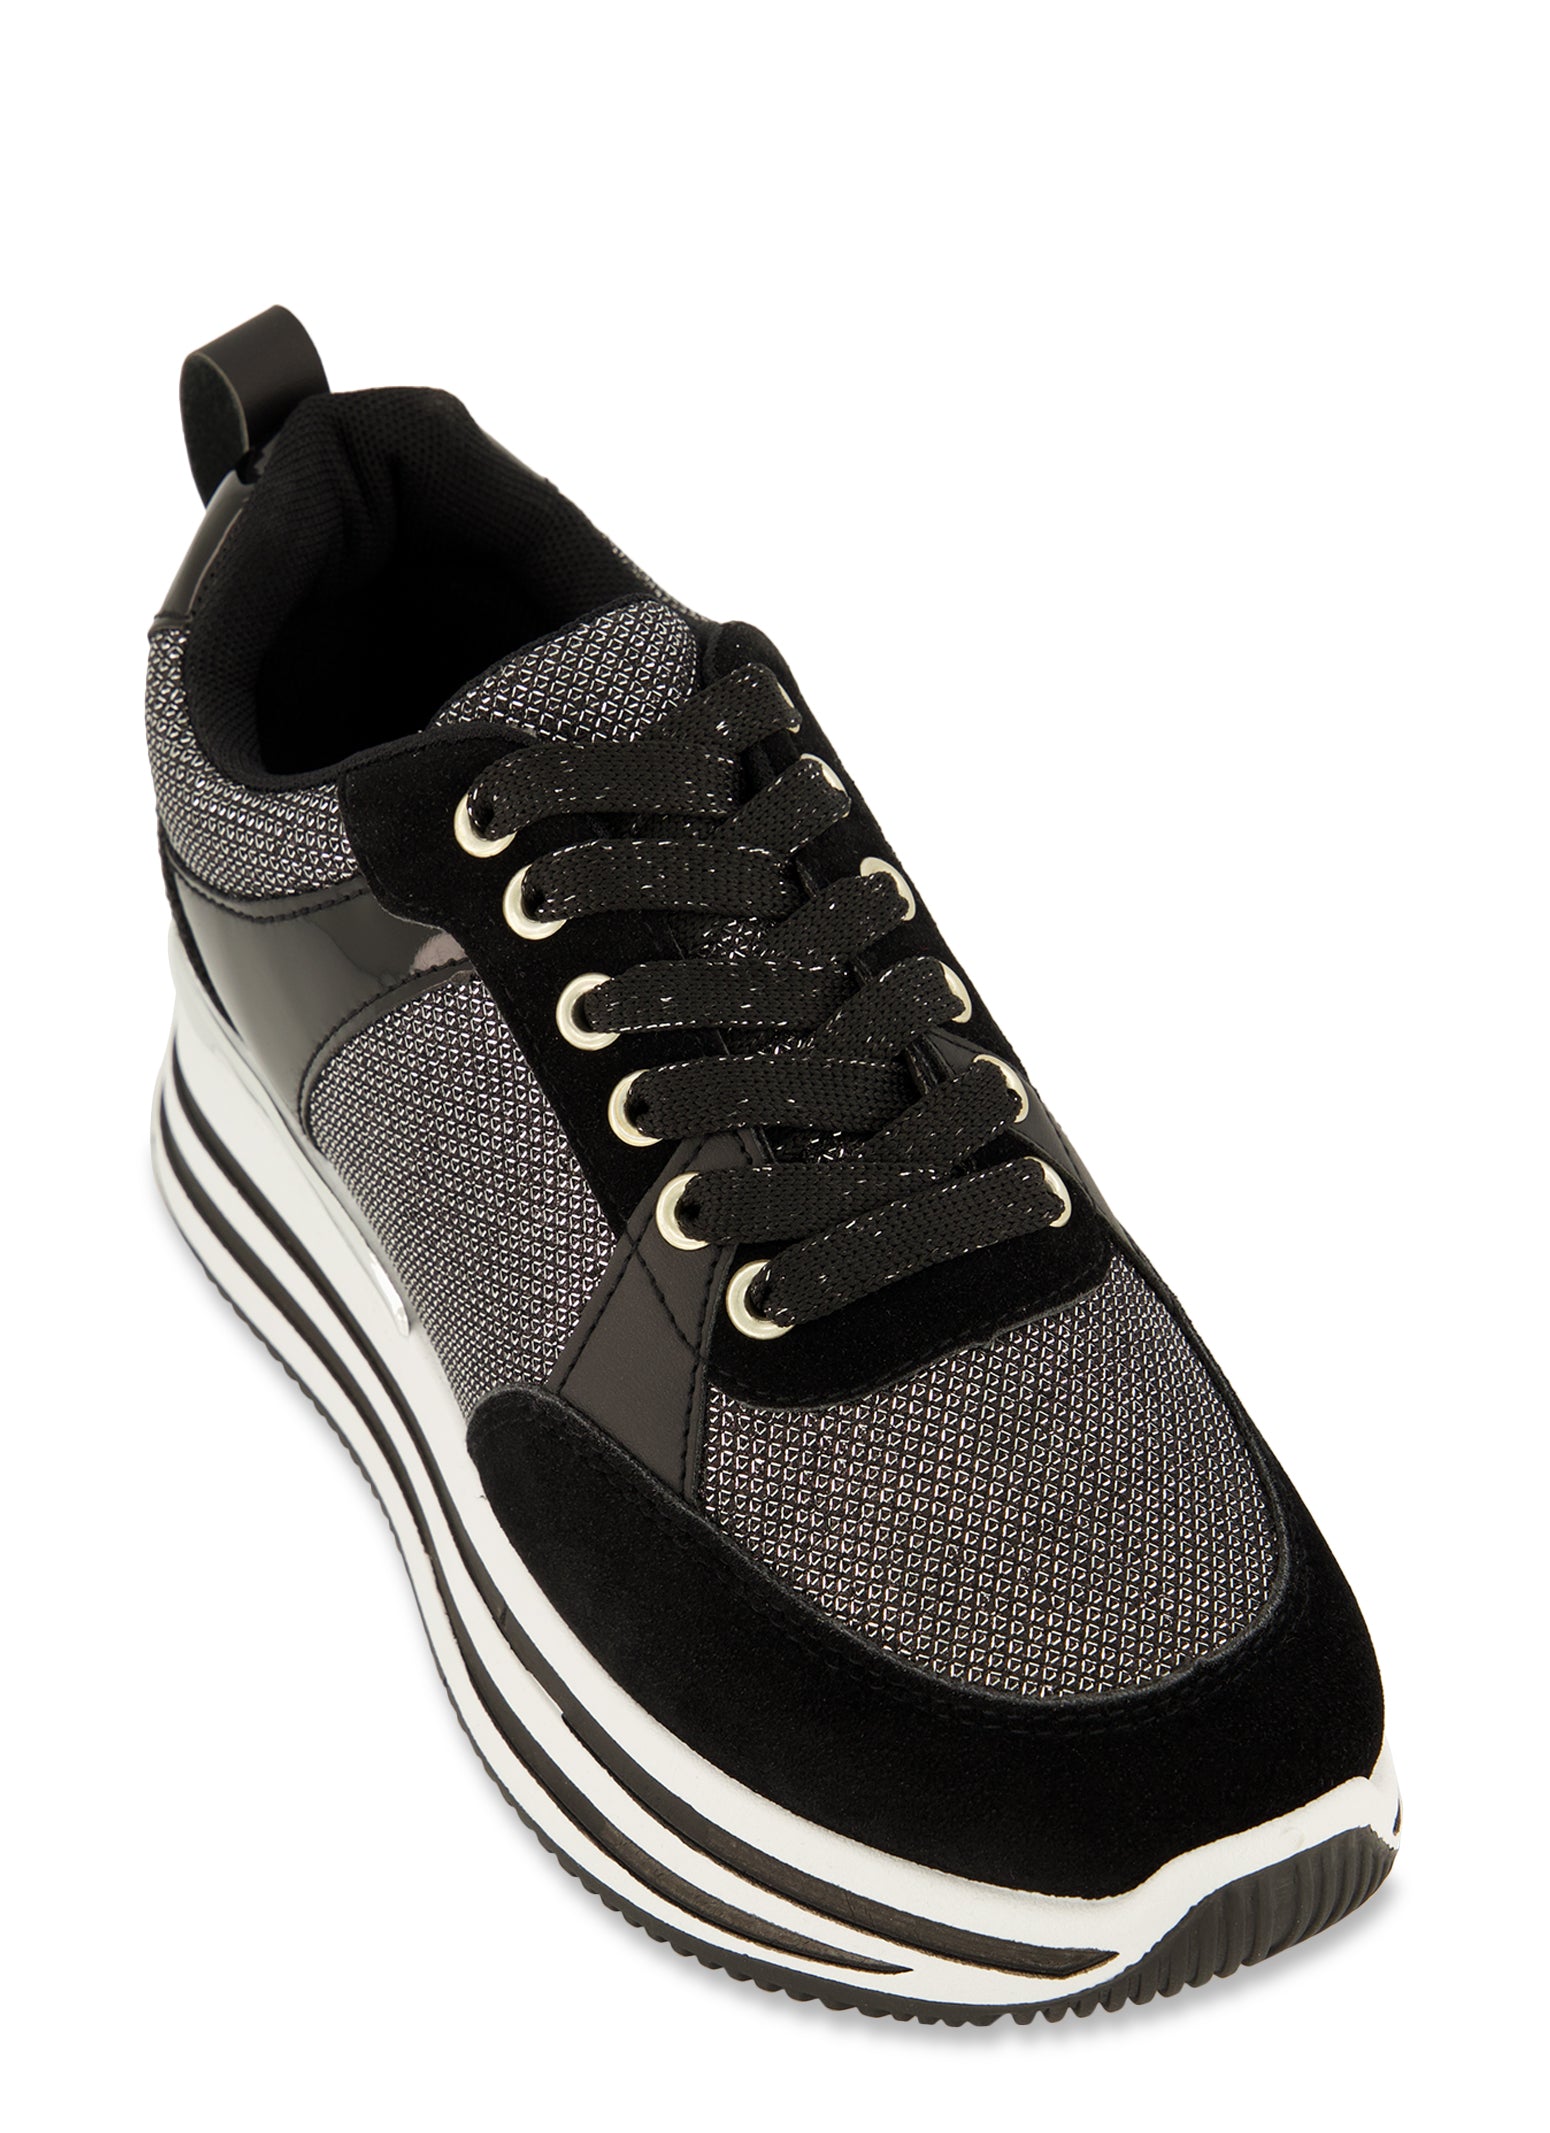 MM6 by Maison Martin Margiela Suede Platform Sneakers in Black | Lyst